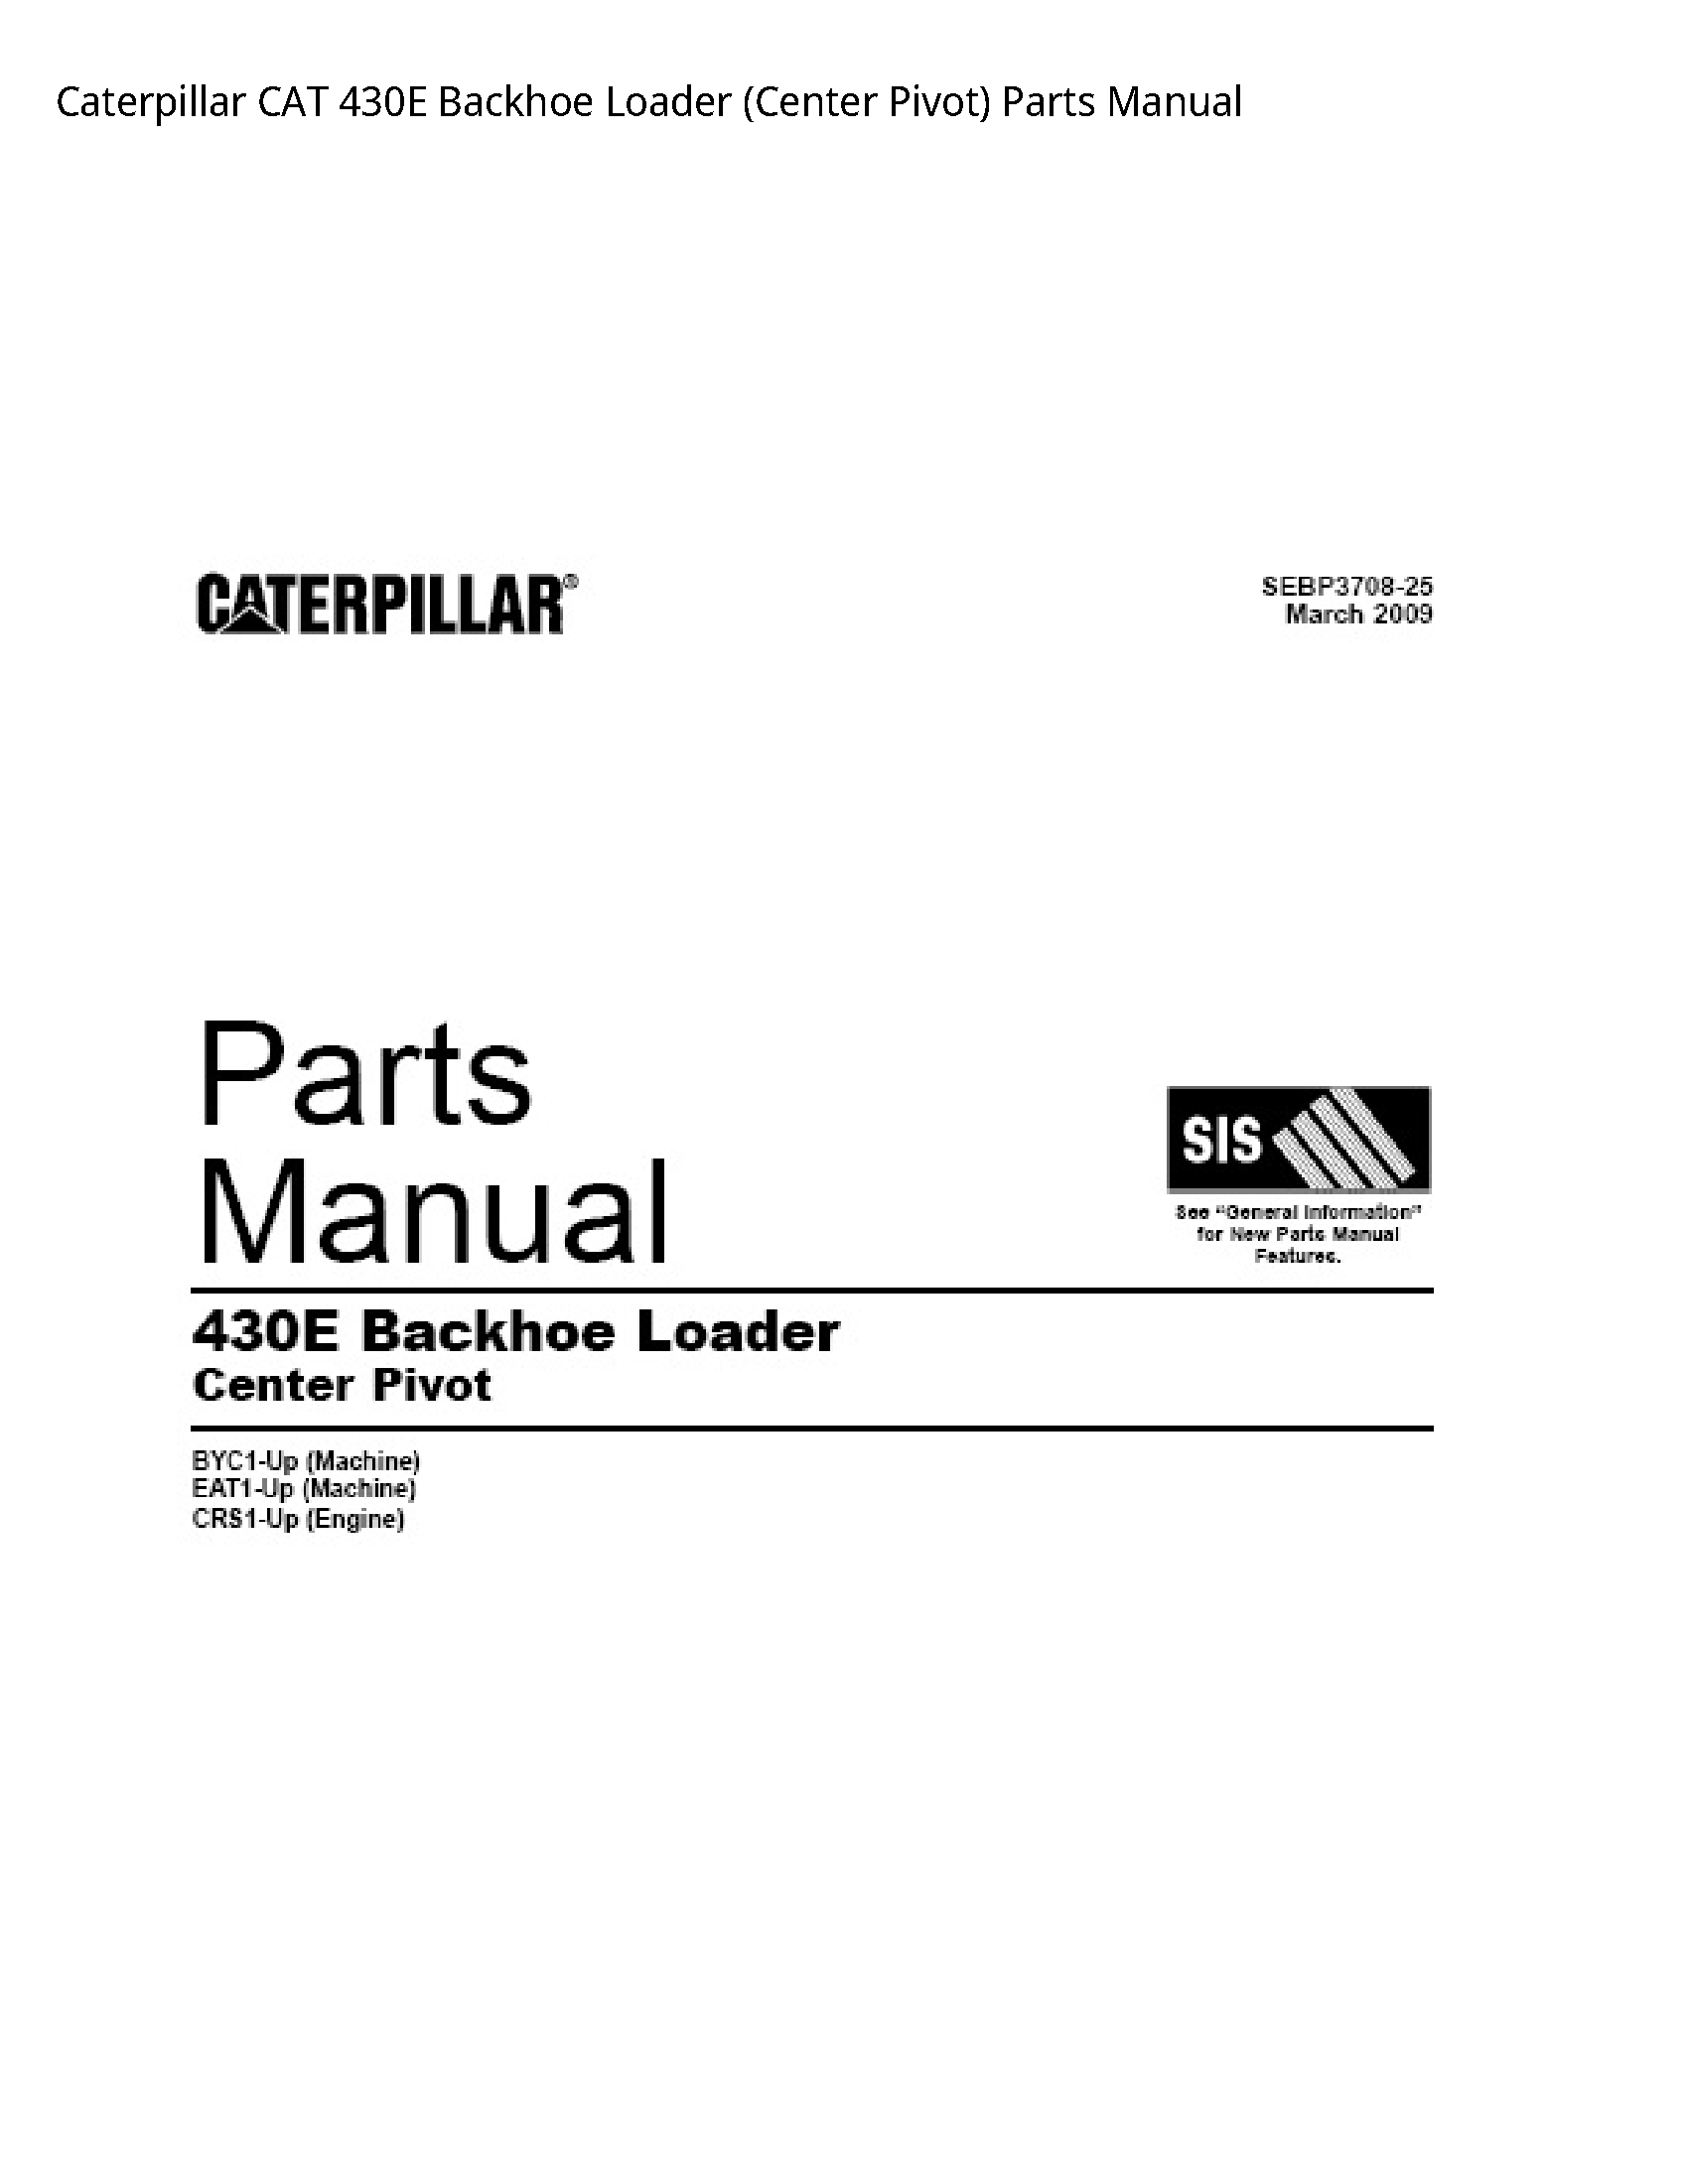 Caterpillar 430E CAT Backhoe Loader (Center Pivot) Parts manual